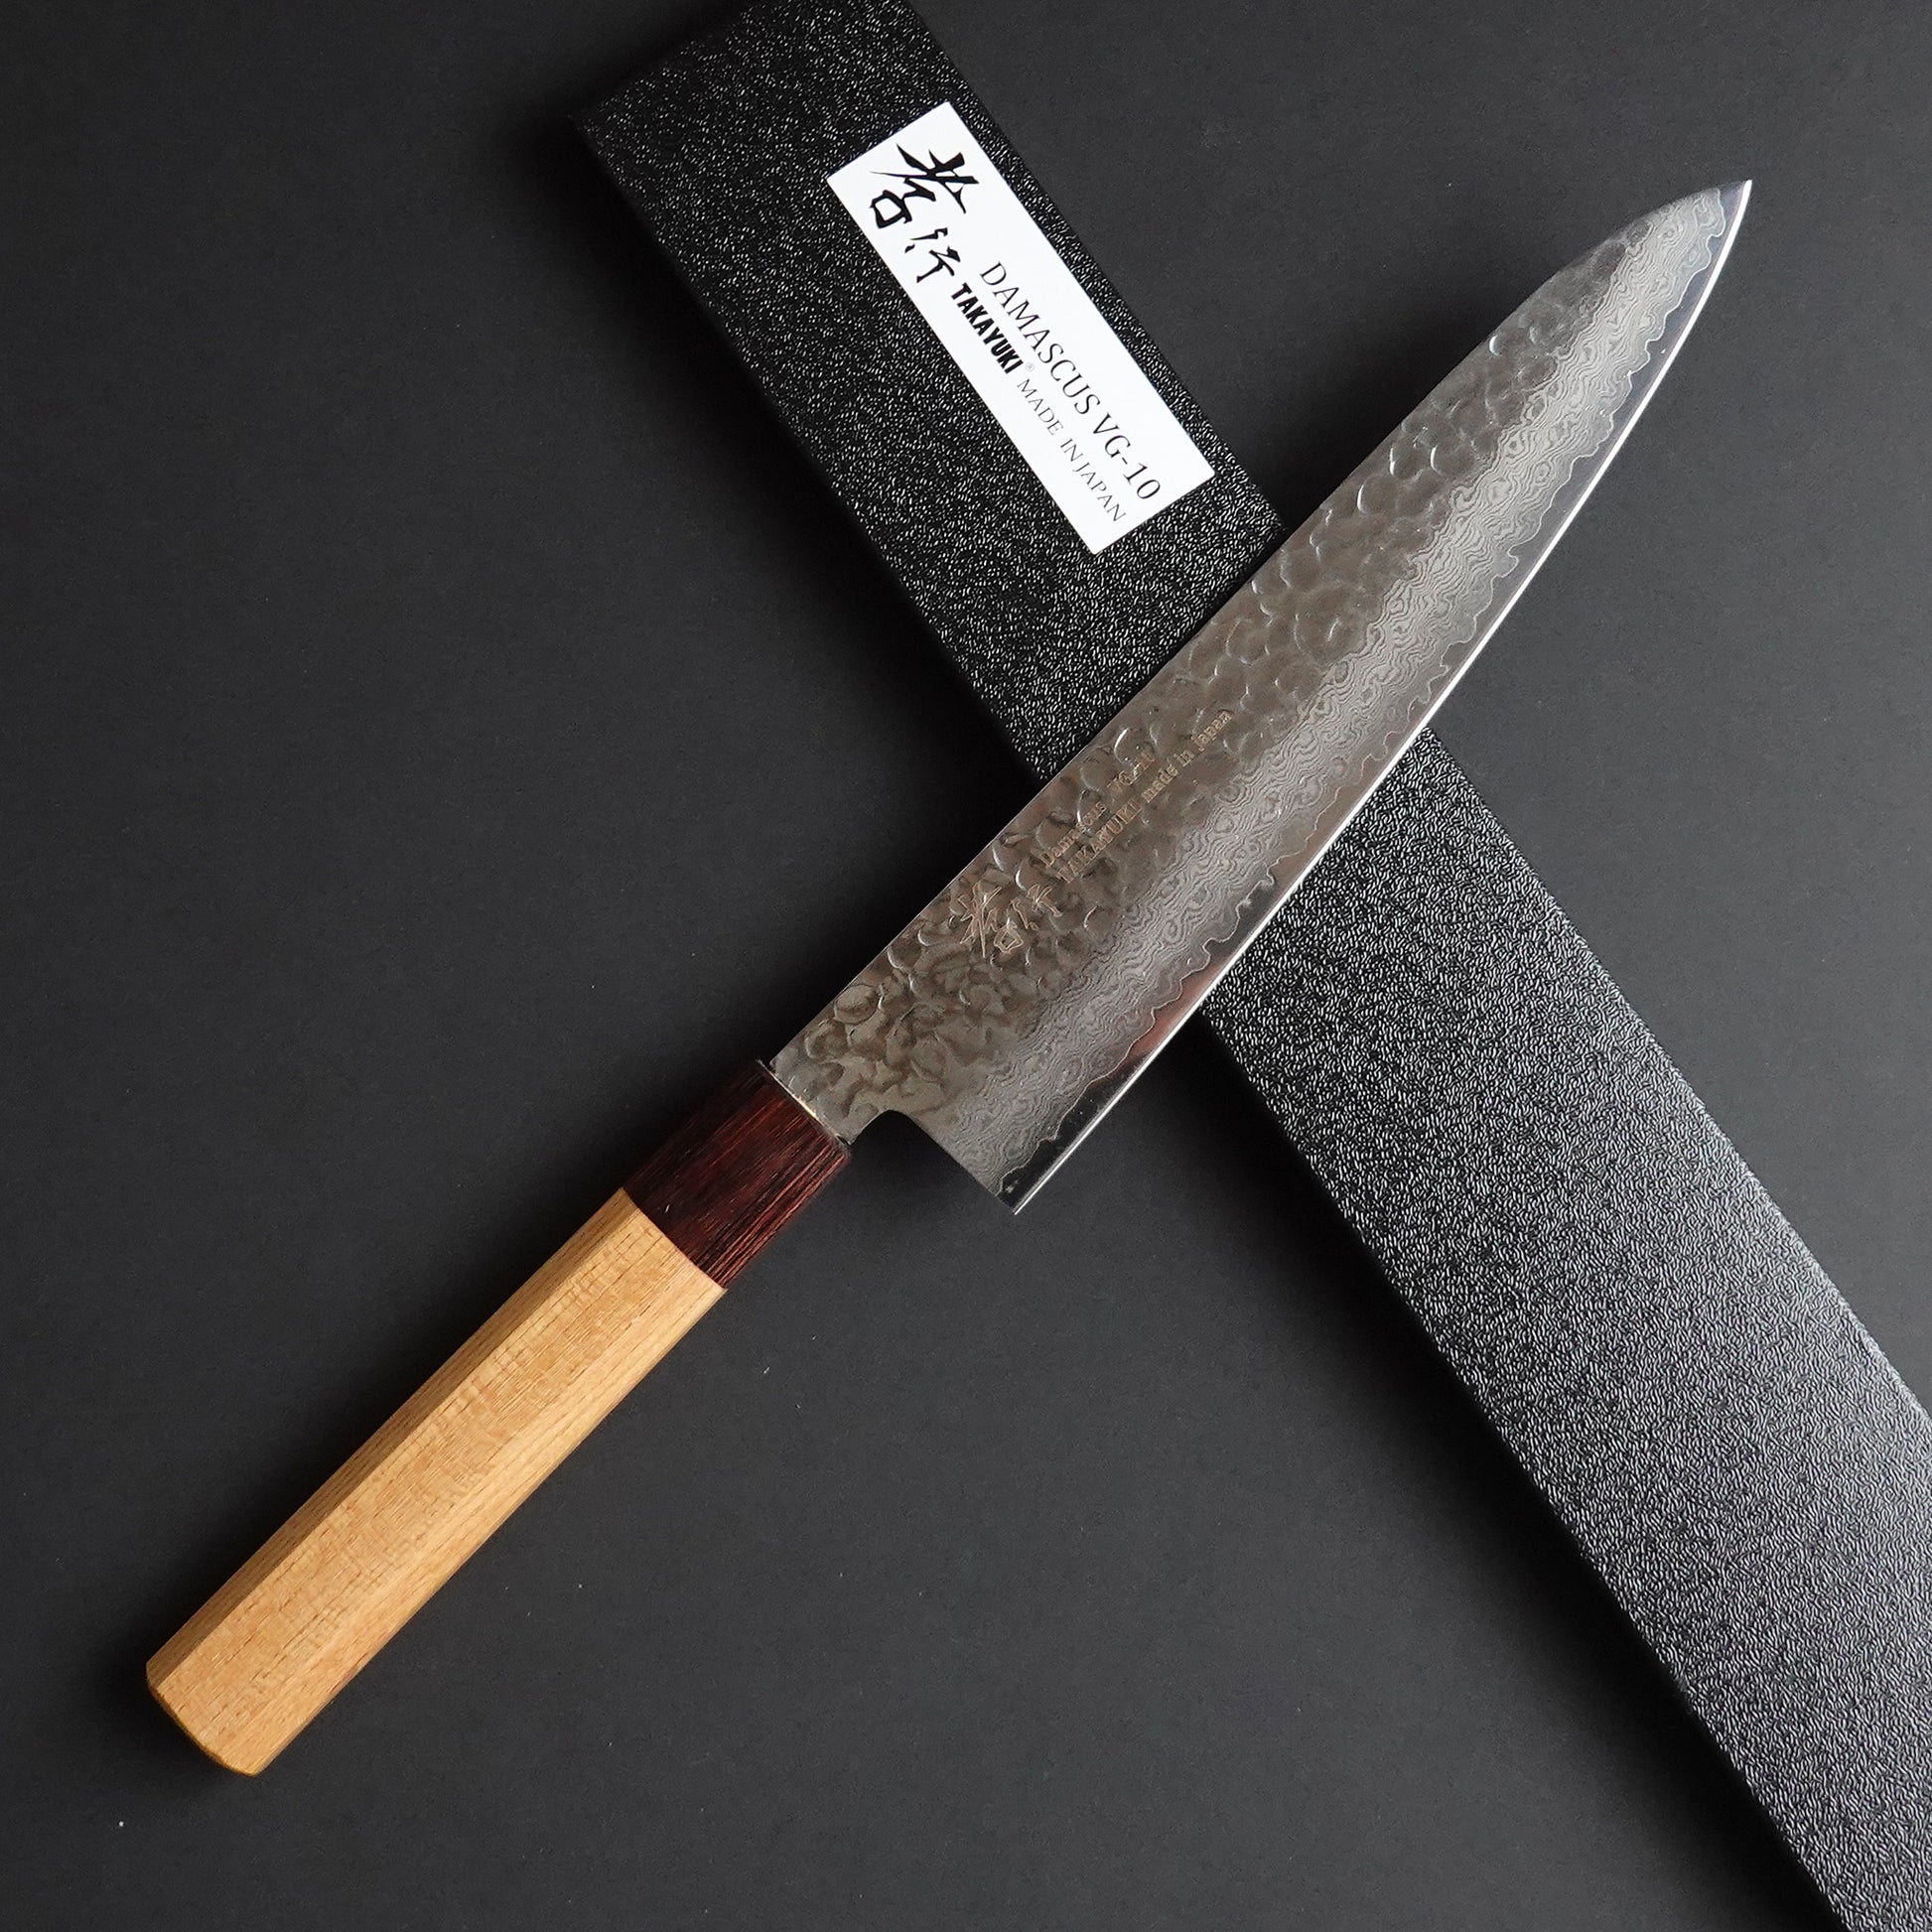 Cuchillos japoneses importados. Cuchillos de corte japonés KAI, Global y  Samura.